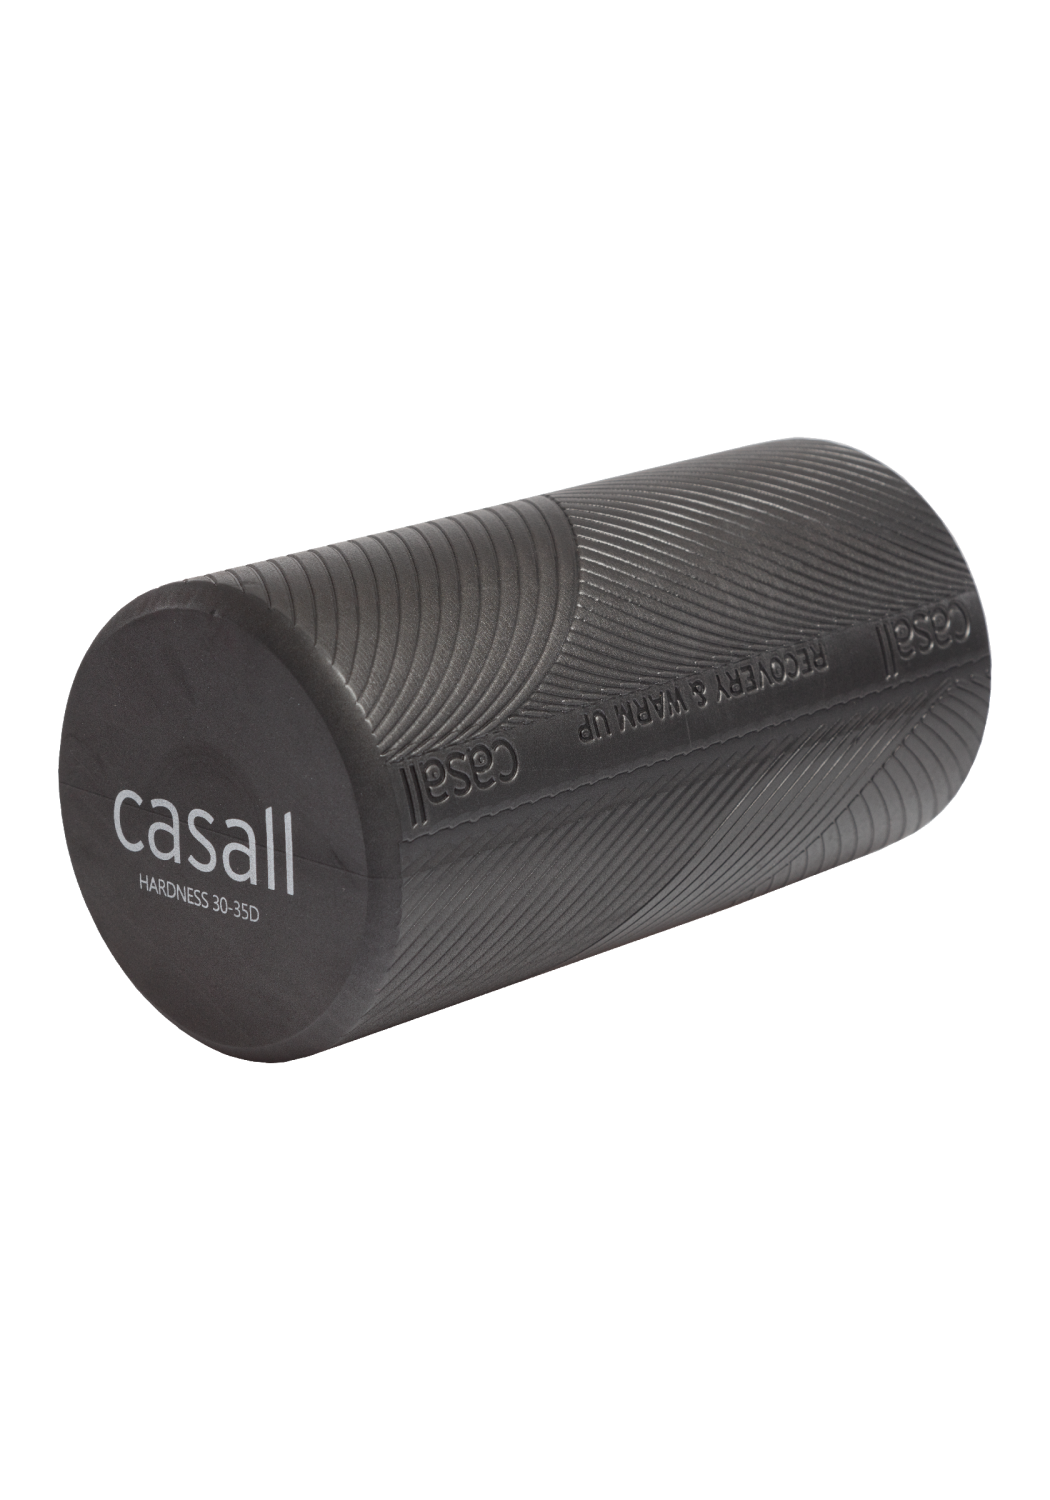 Casall Foam roll small